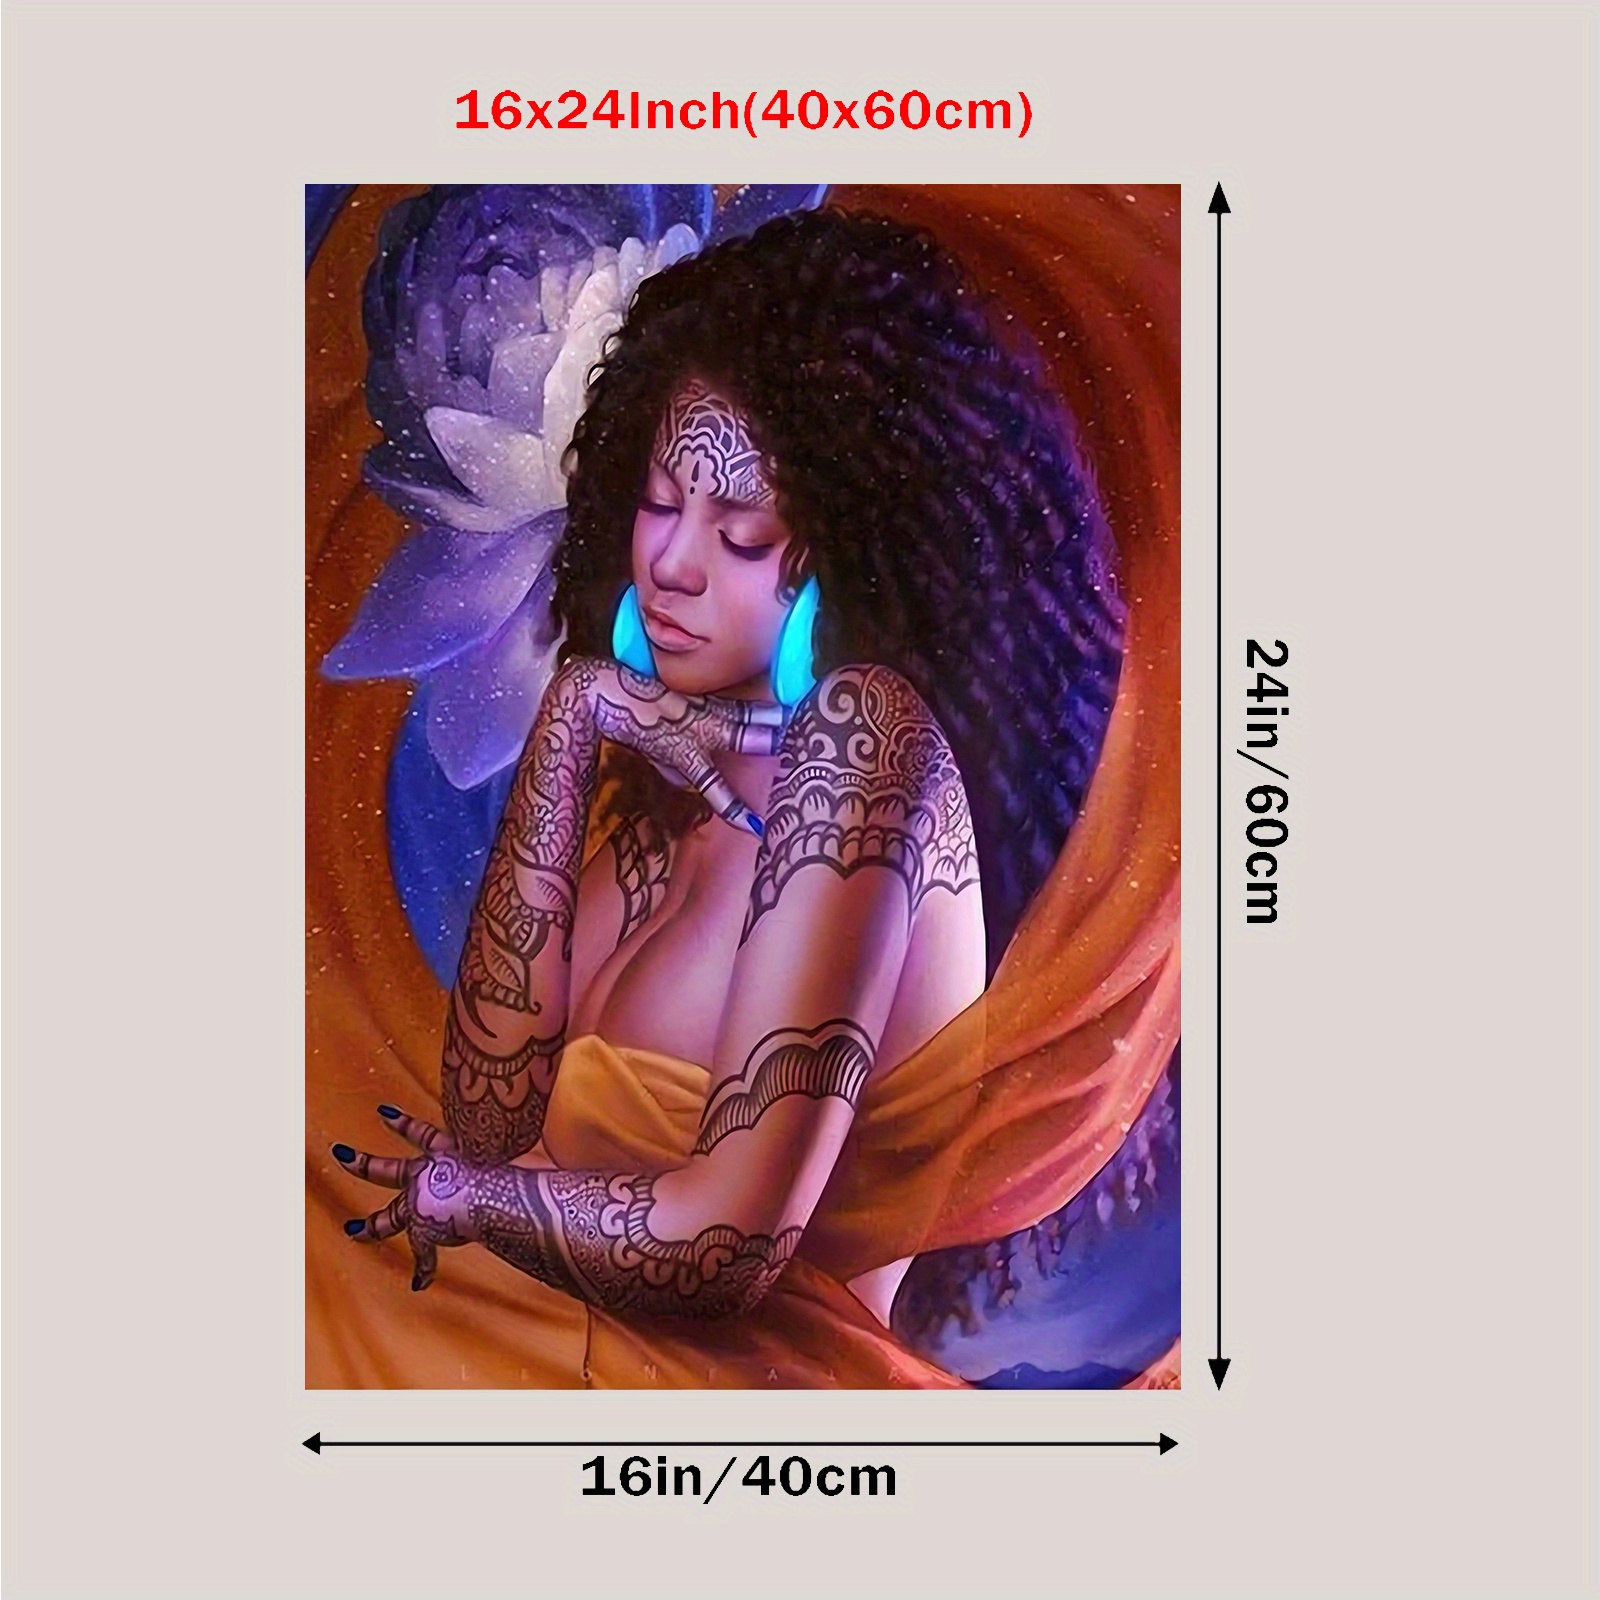 Tribal Black Afro Woman Wall Art Beauty Illustration Wall Decor Modern  Frame Art 